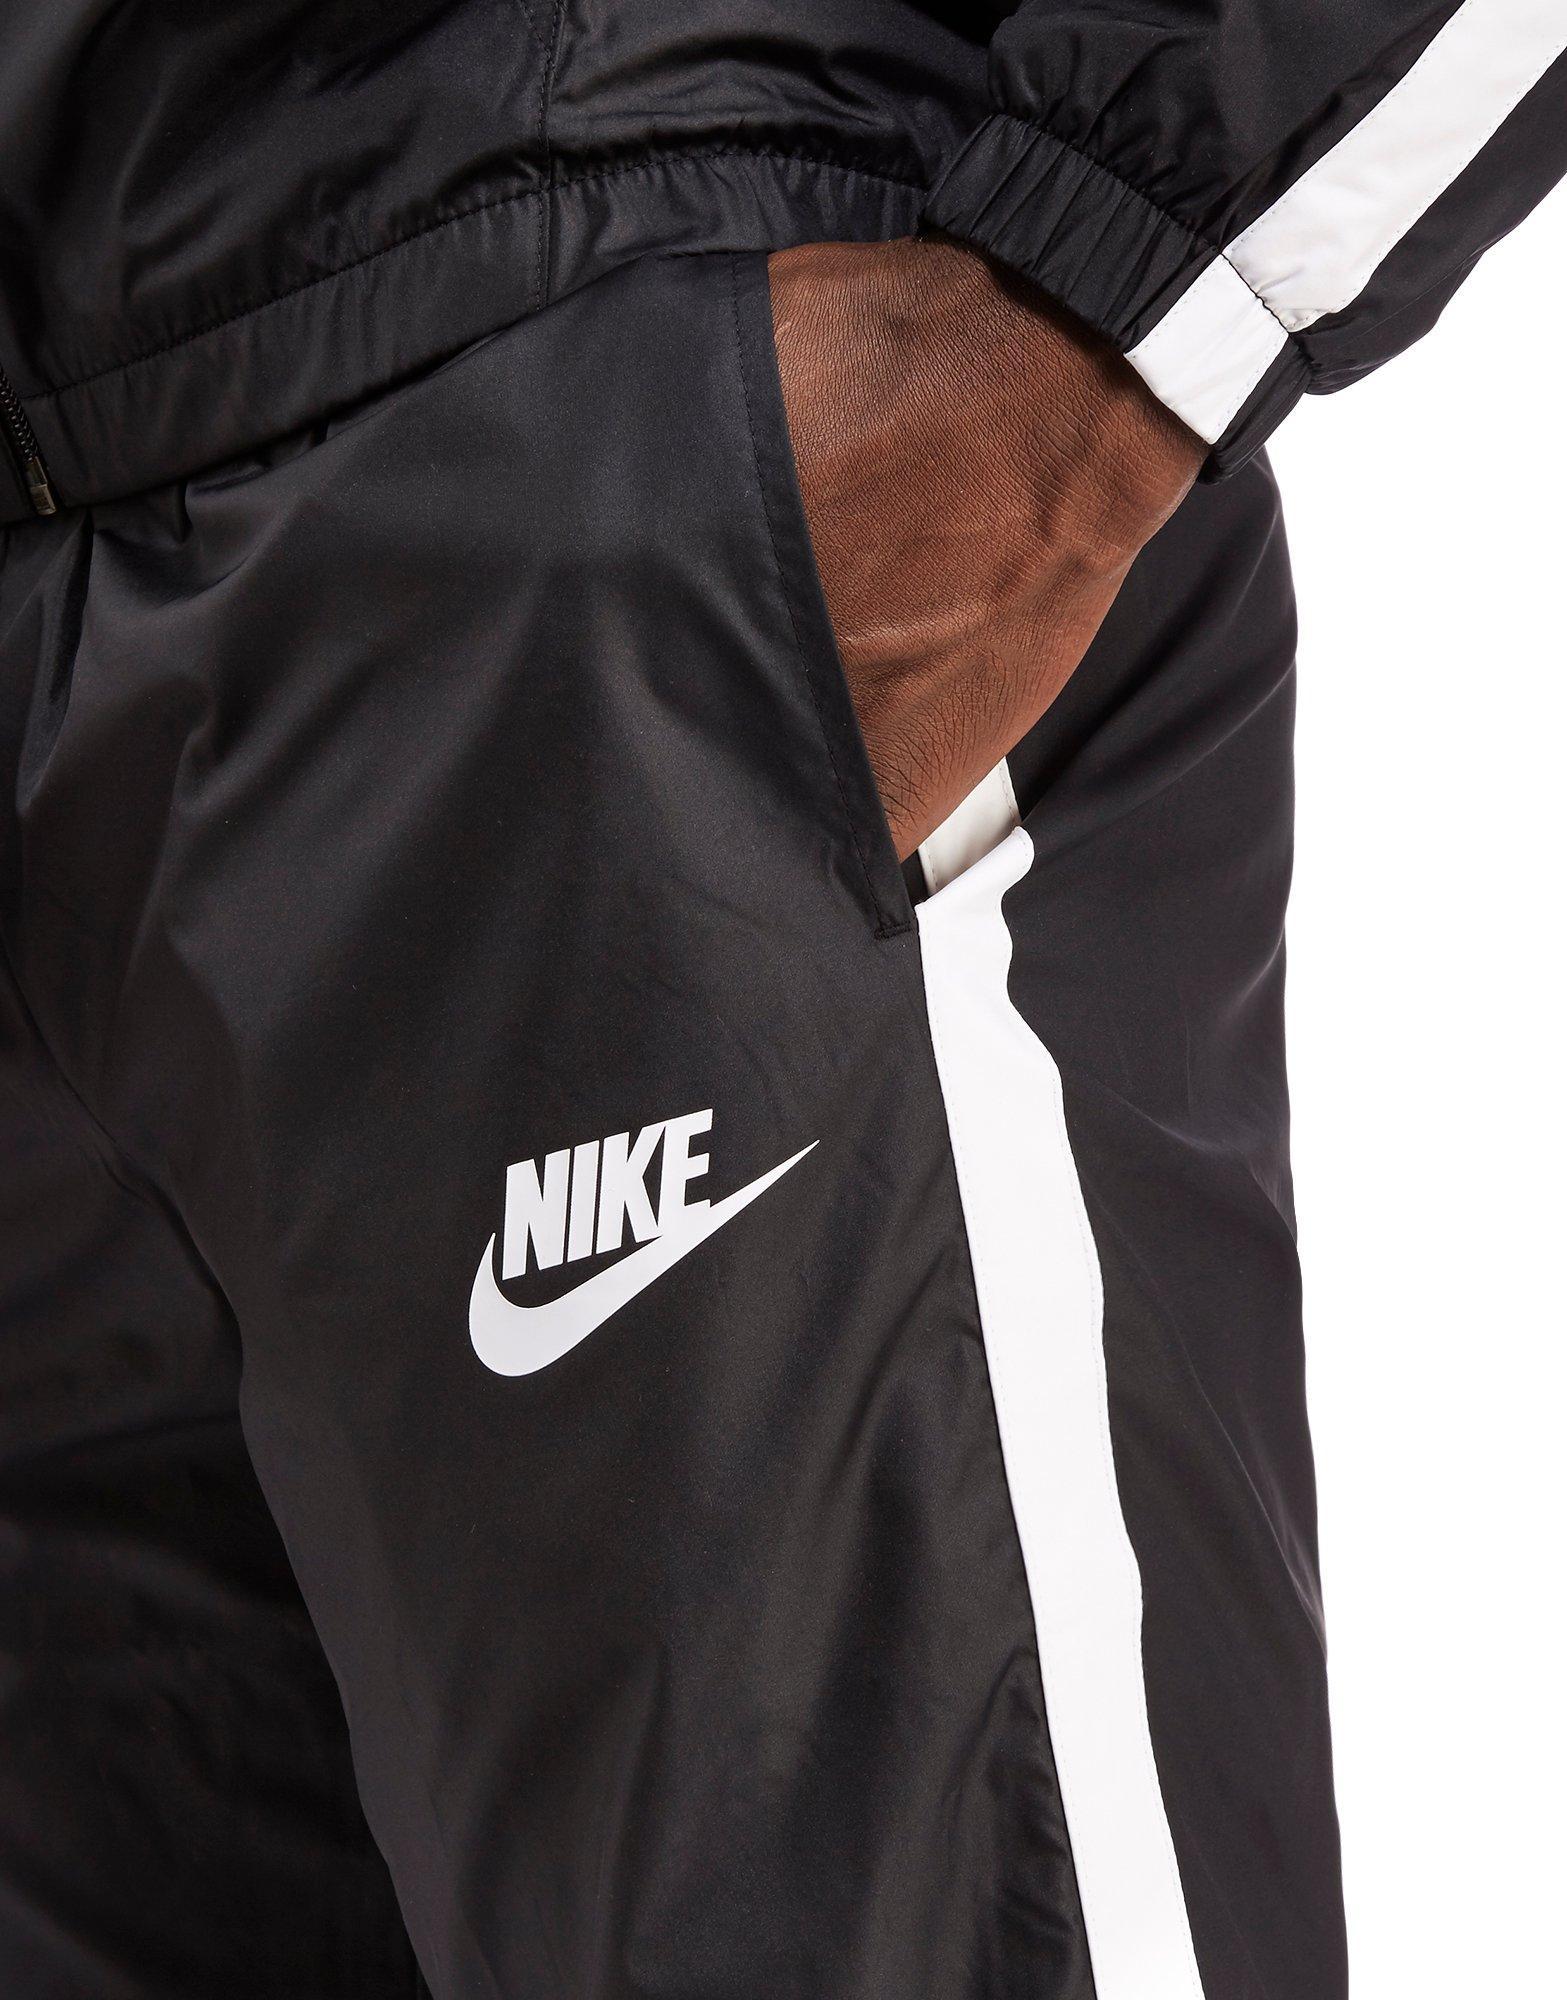 Nike Synthetic Season Woven Tracksuit in Black/White (Black) for Men - Lyst